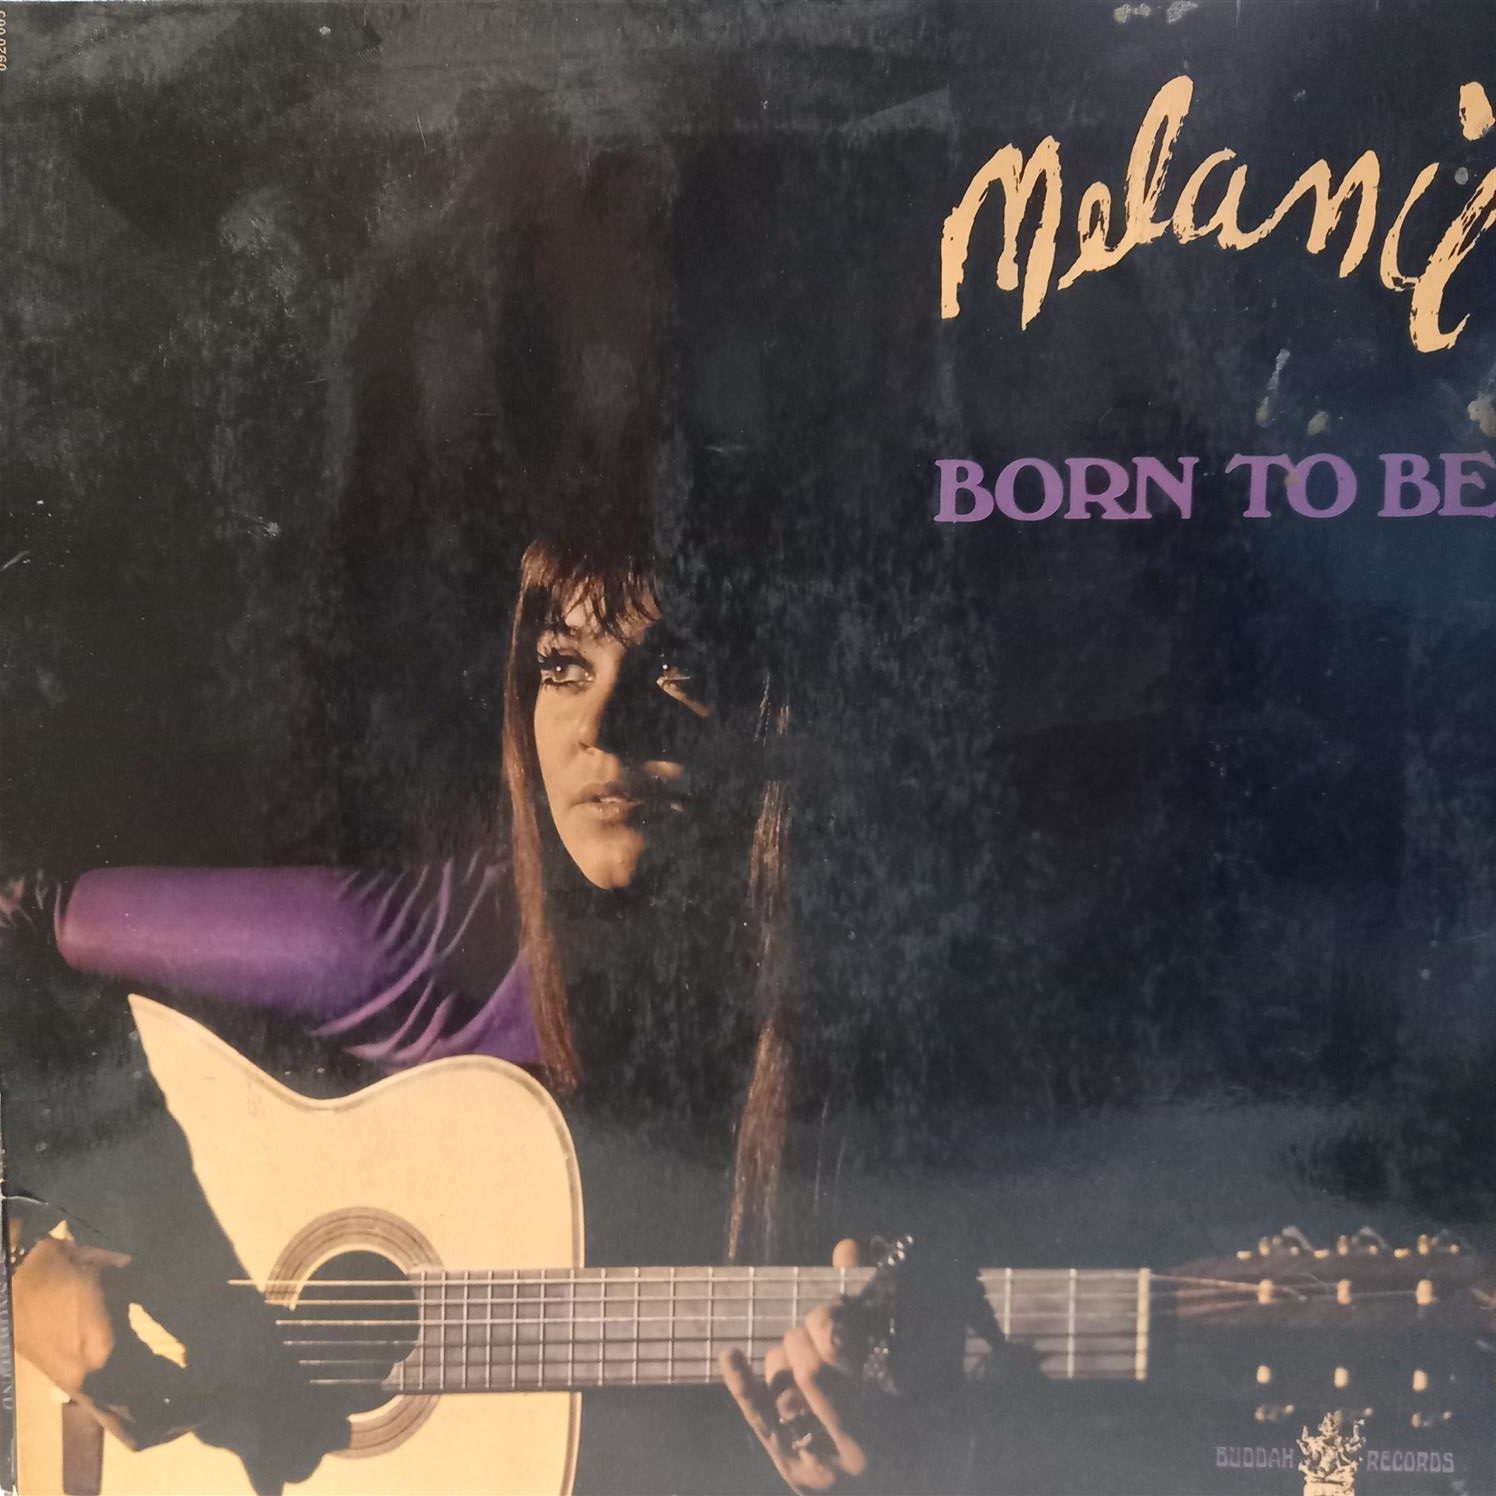 MELANIE – BORN TO BE ON